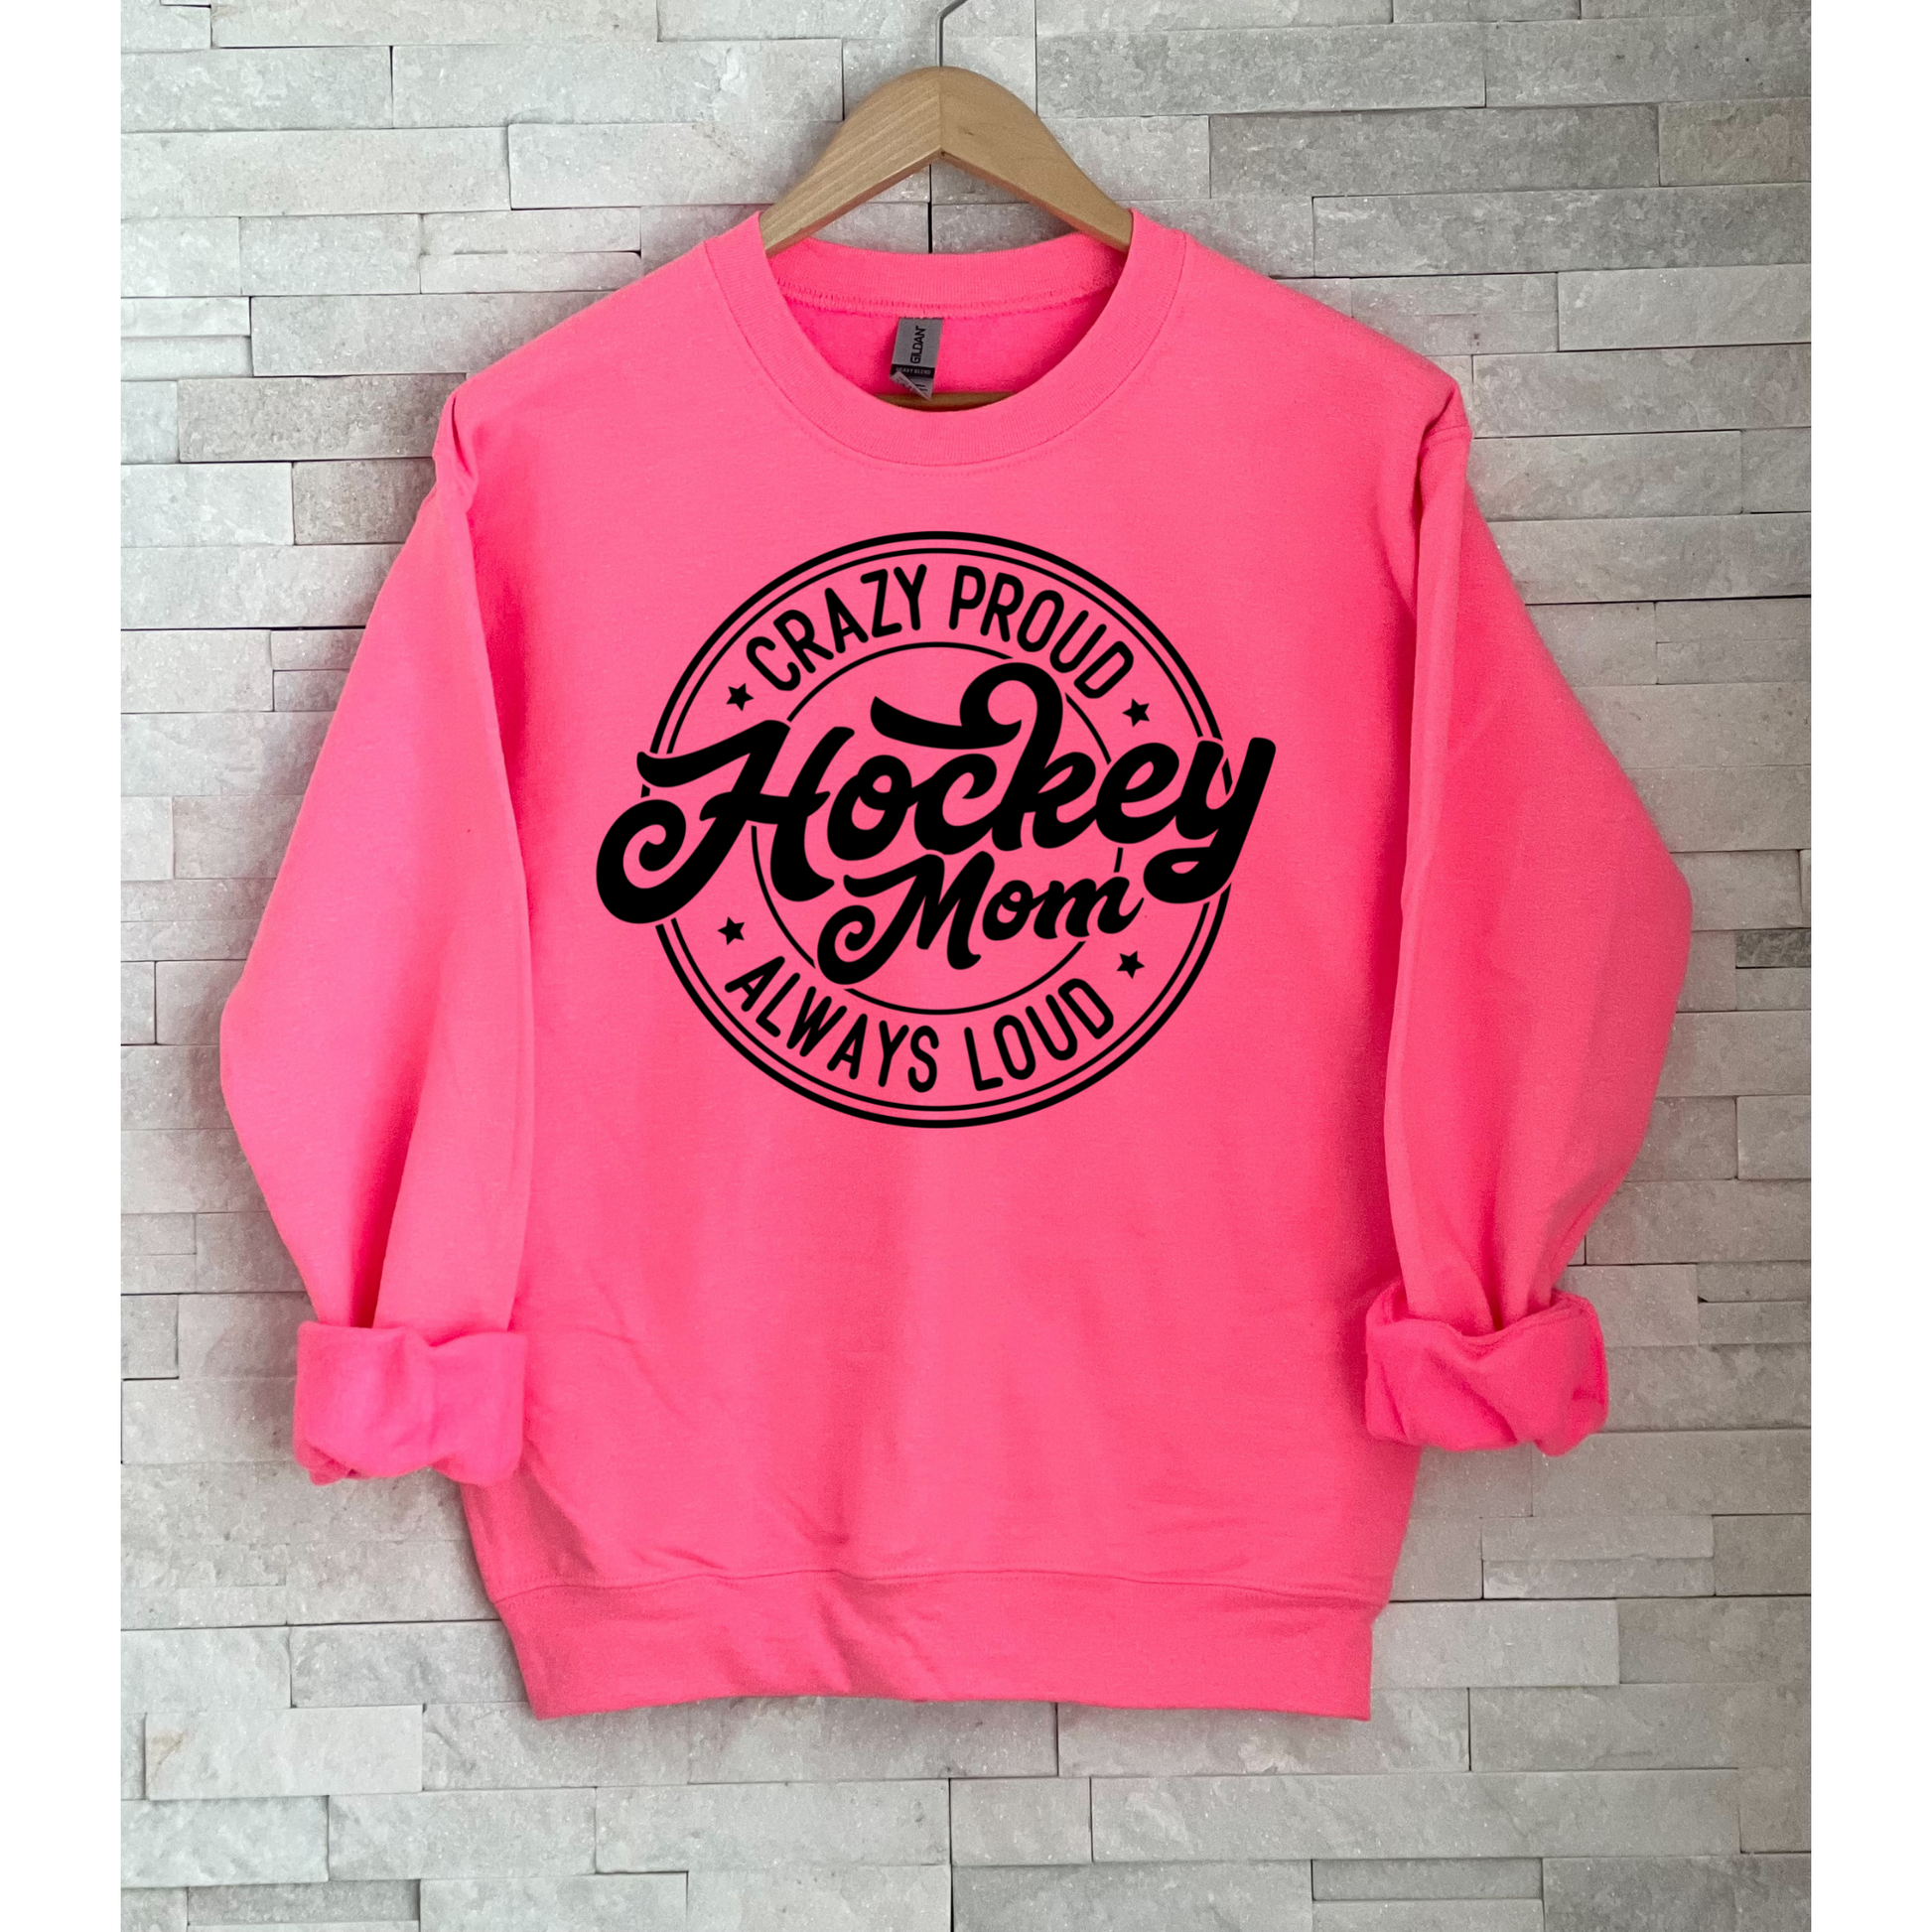 Crazy Proud Always Loud Hockey Mom Crewneck Sweatshirt Hot Pink